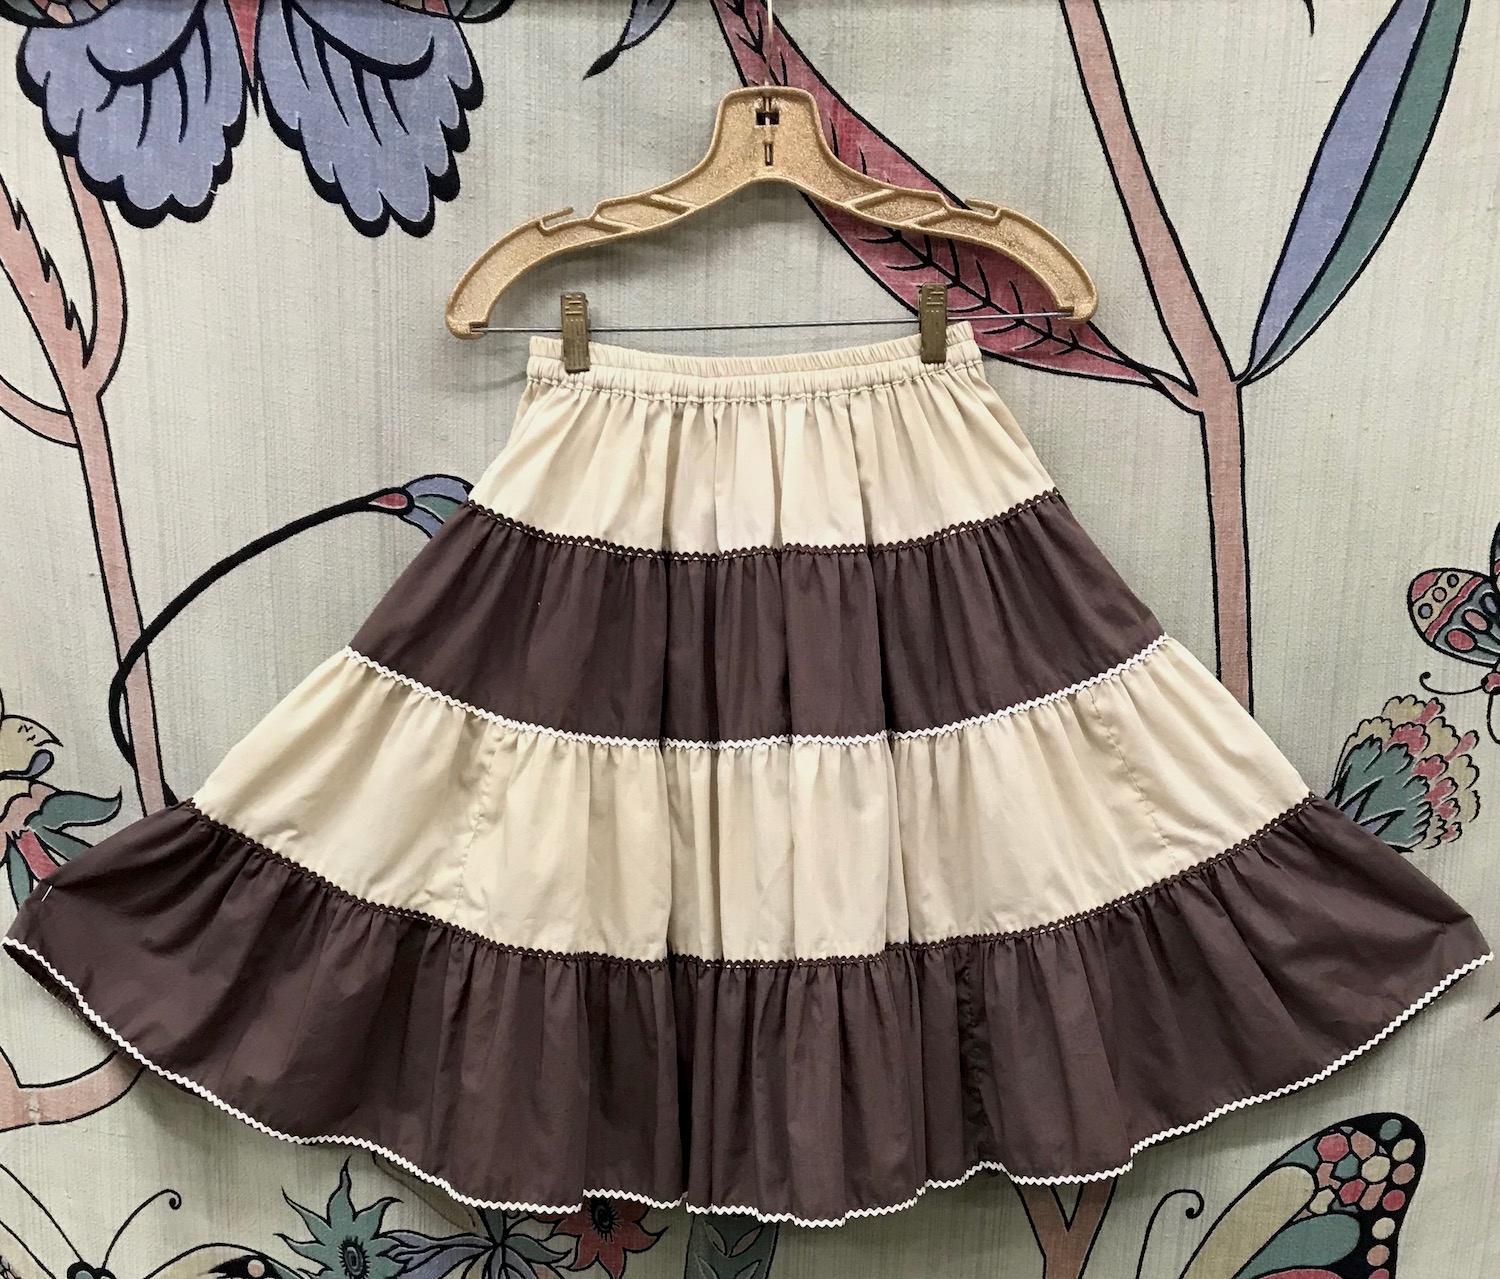 Vintage 70s Square Dance Skirt - Tucson Thrift Shop